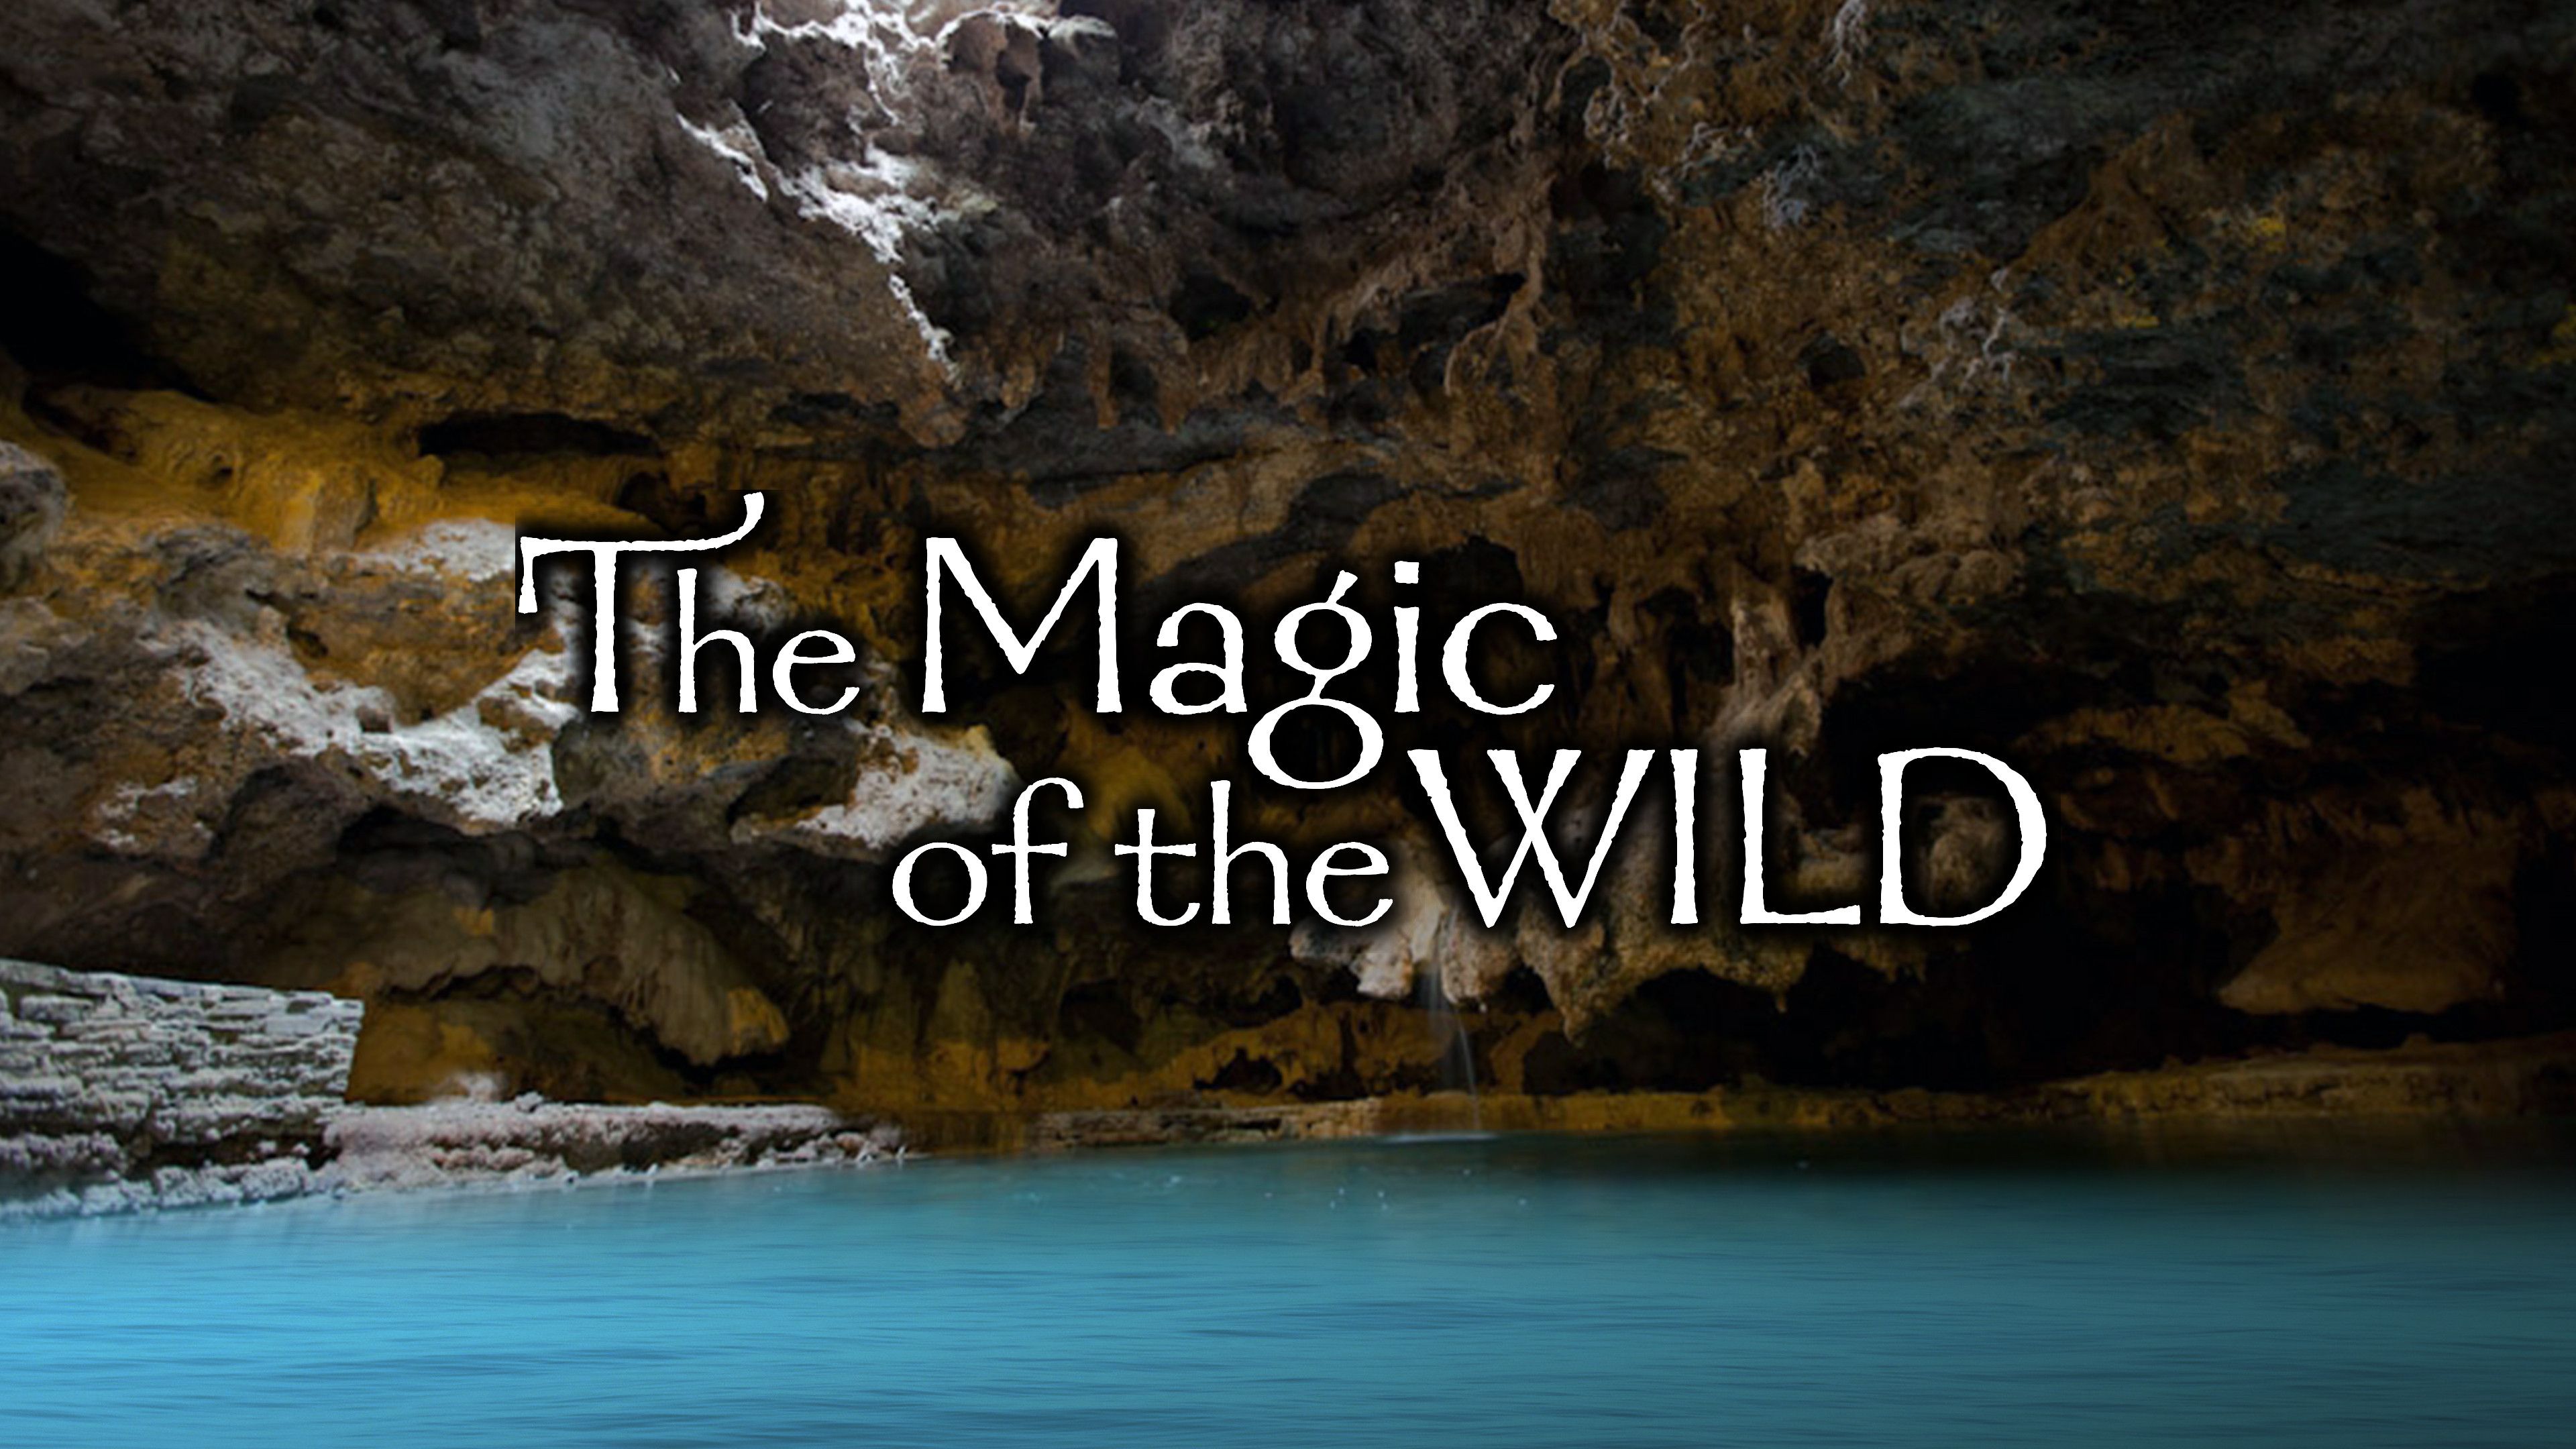 The Magic of the Wild